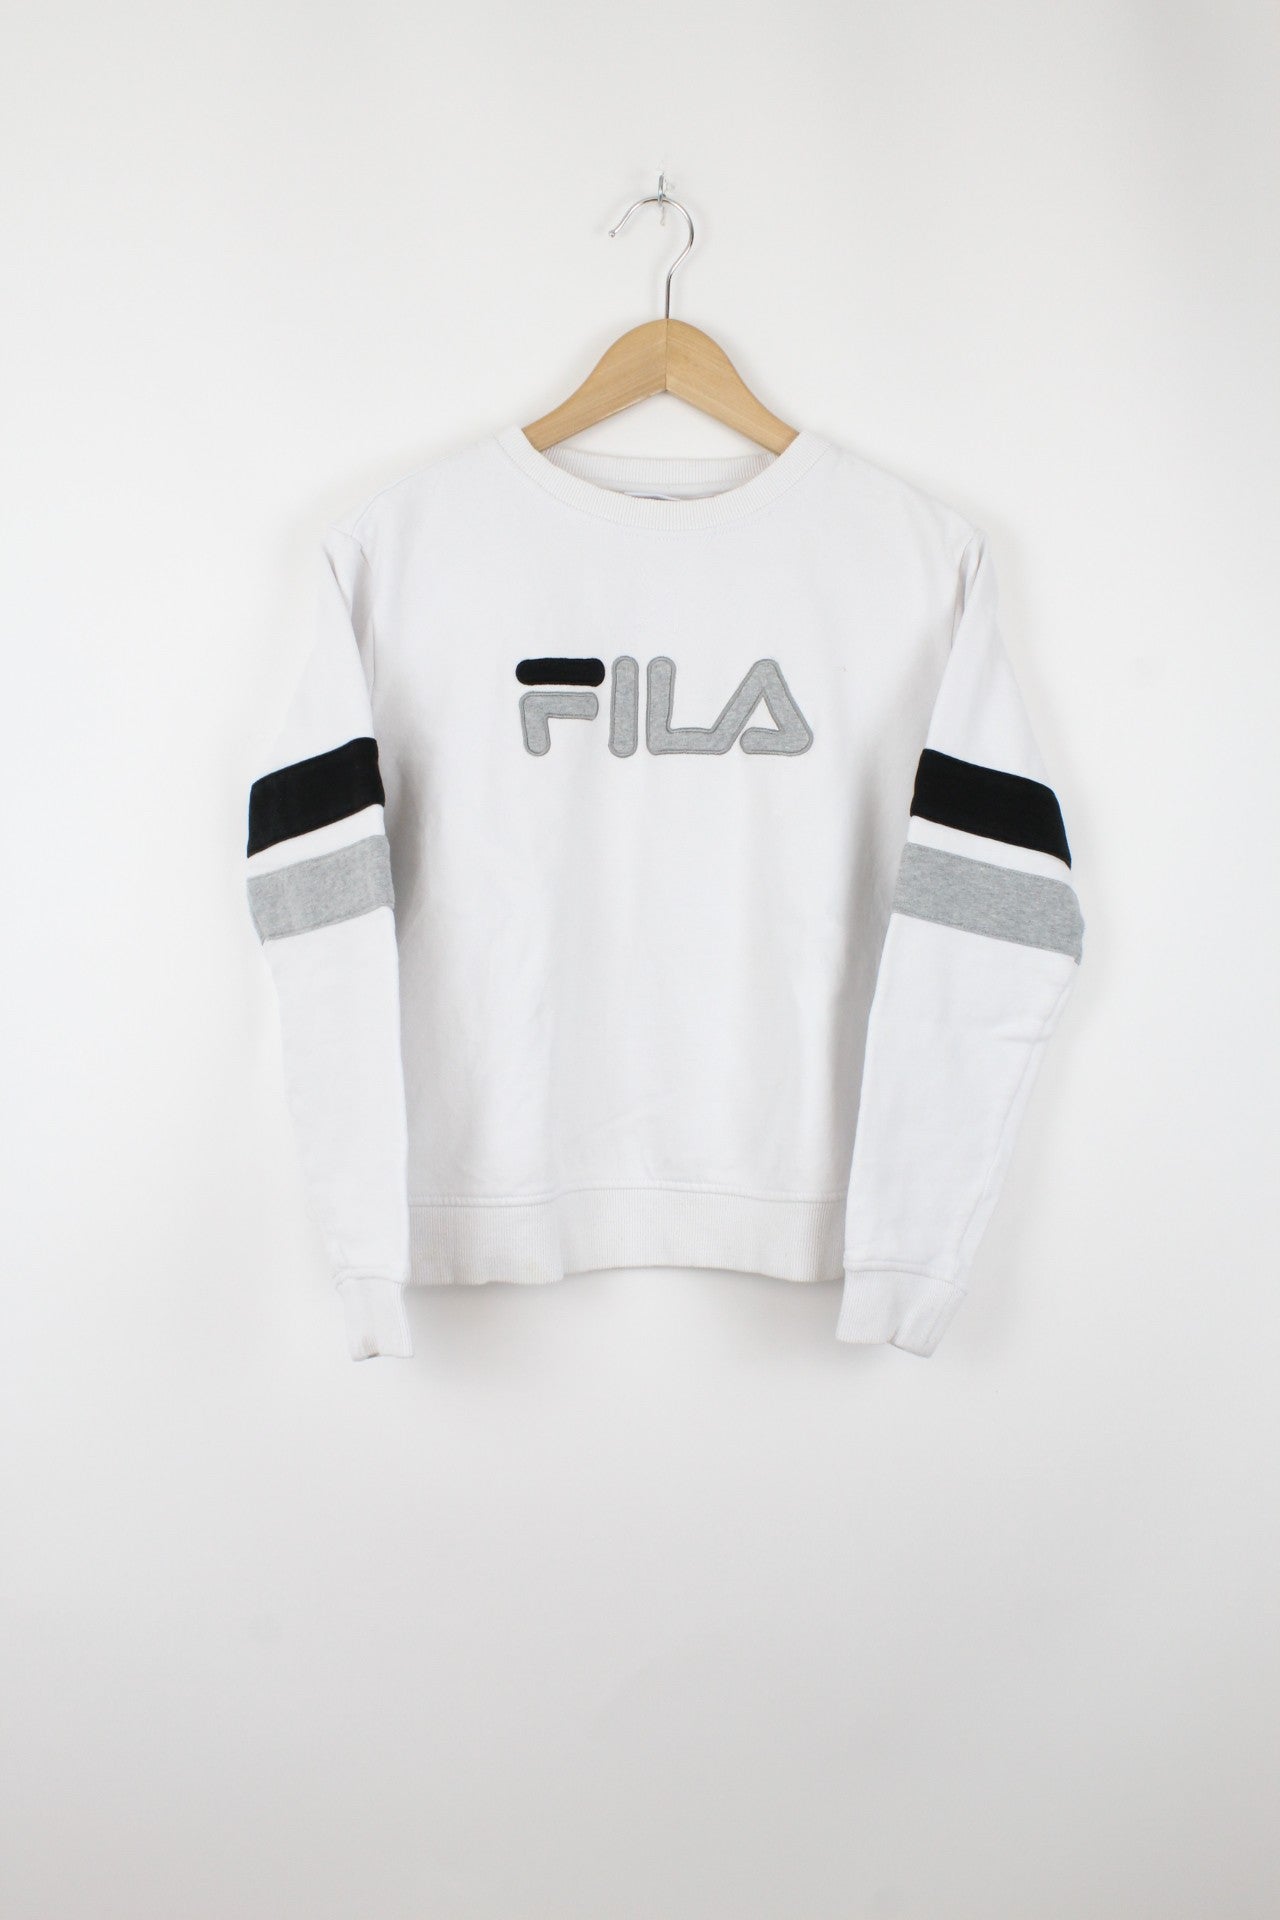 Vintage Fila Sweater - XS